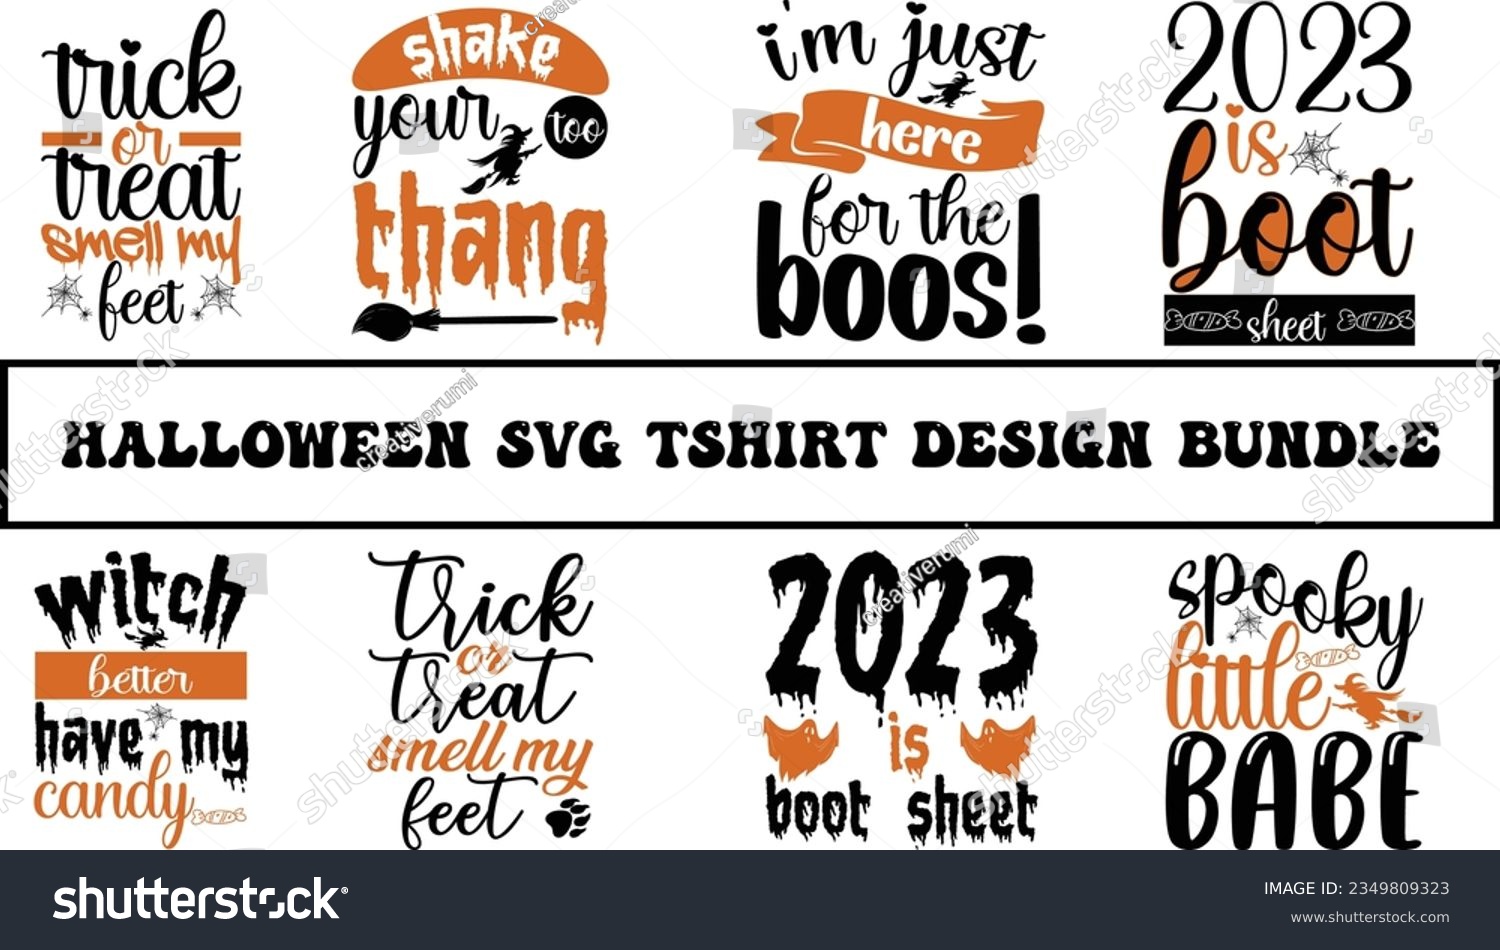 SVG of Halloween SVG Design Template, Halloween SVG Design, Halloween SVG Design Bundle. svg